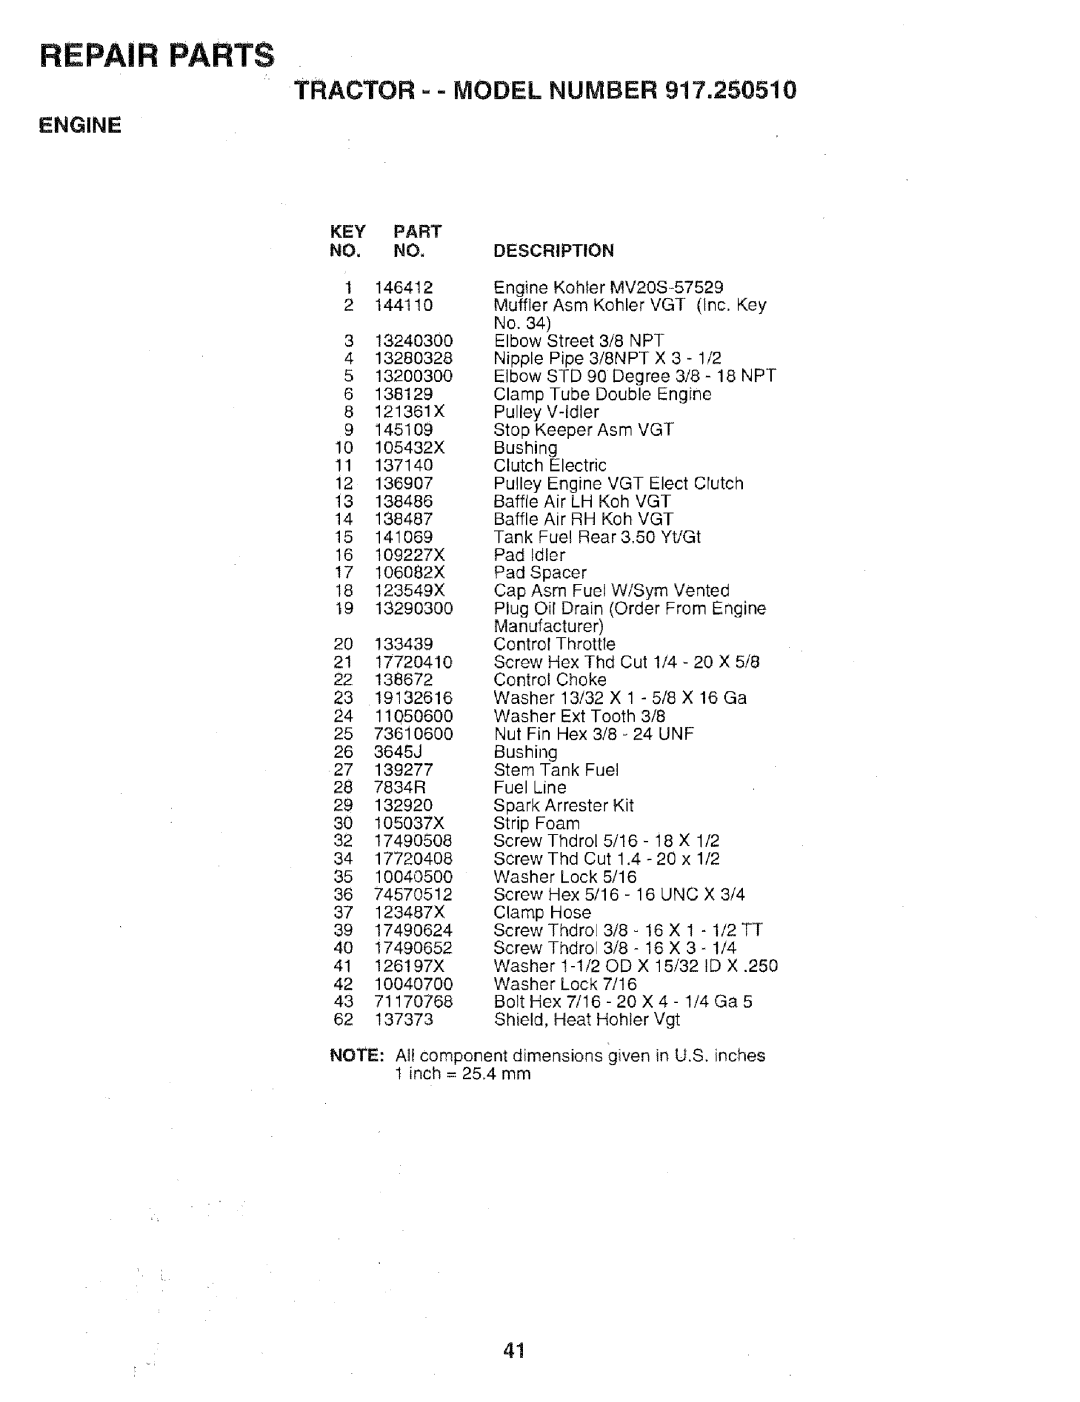 Sears 917.25051 manual Tractor = - Model Number, Repair Parts, Engine, Description 